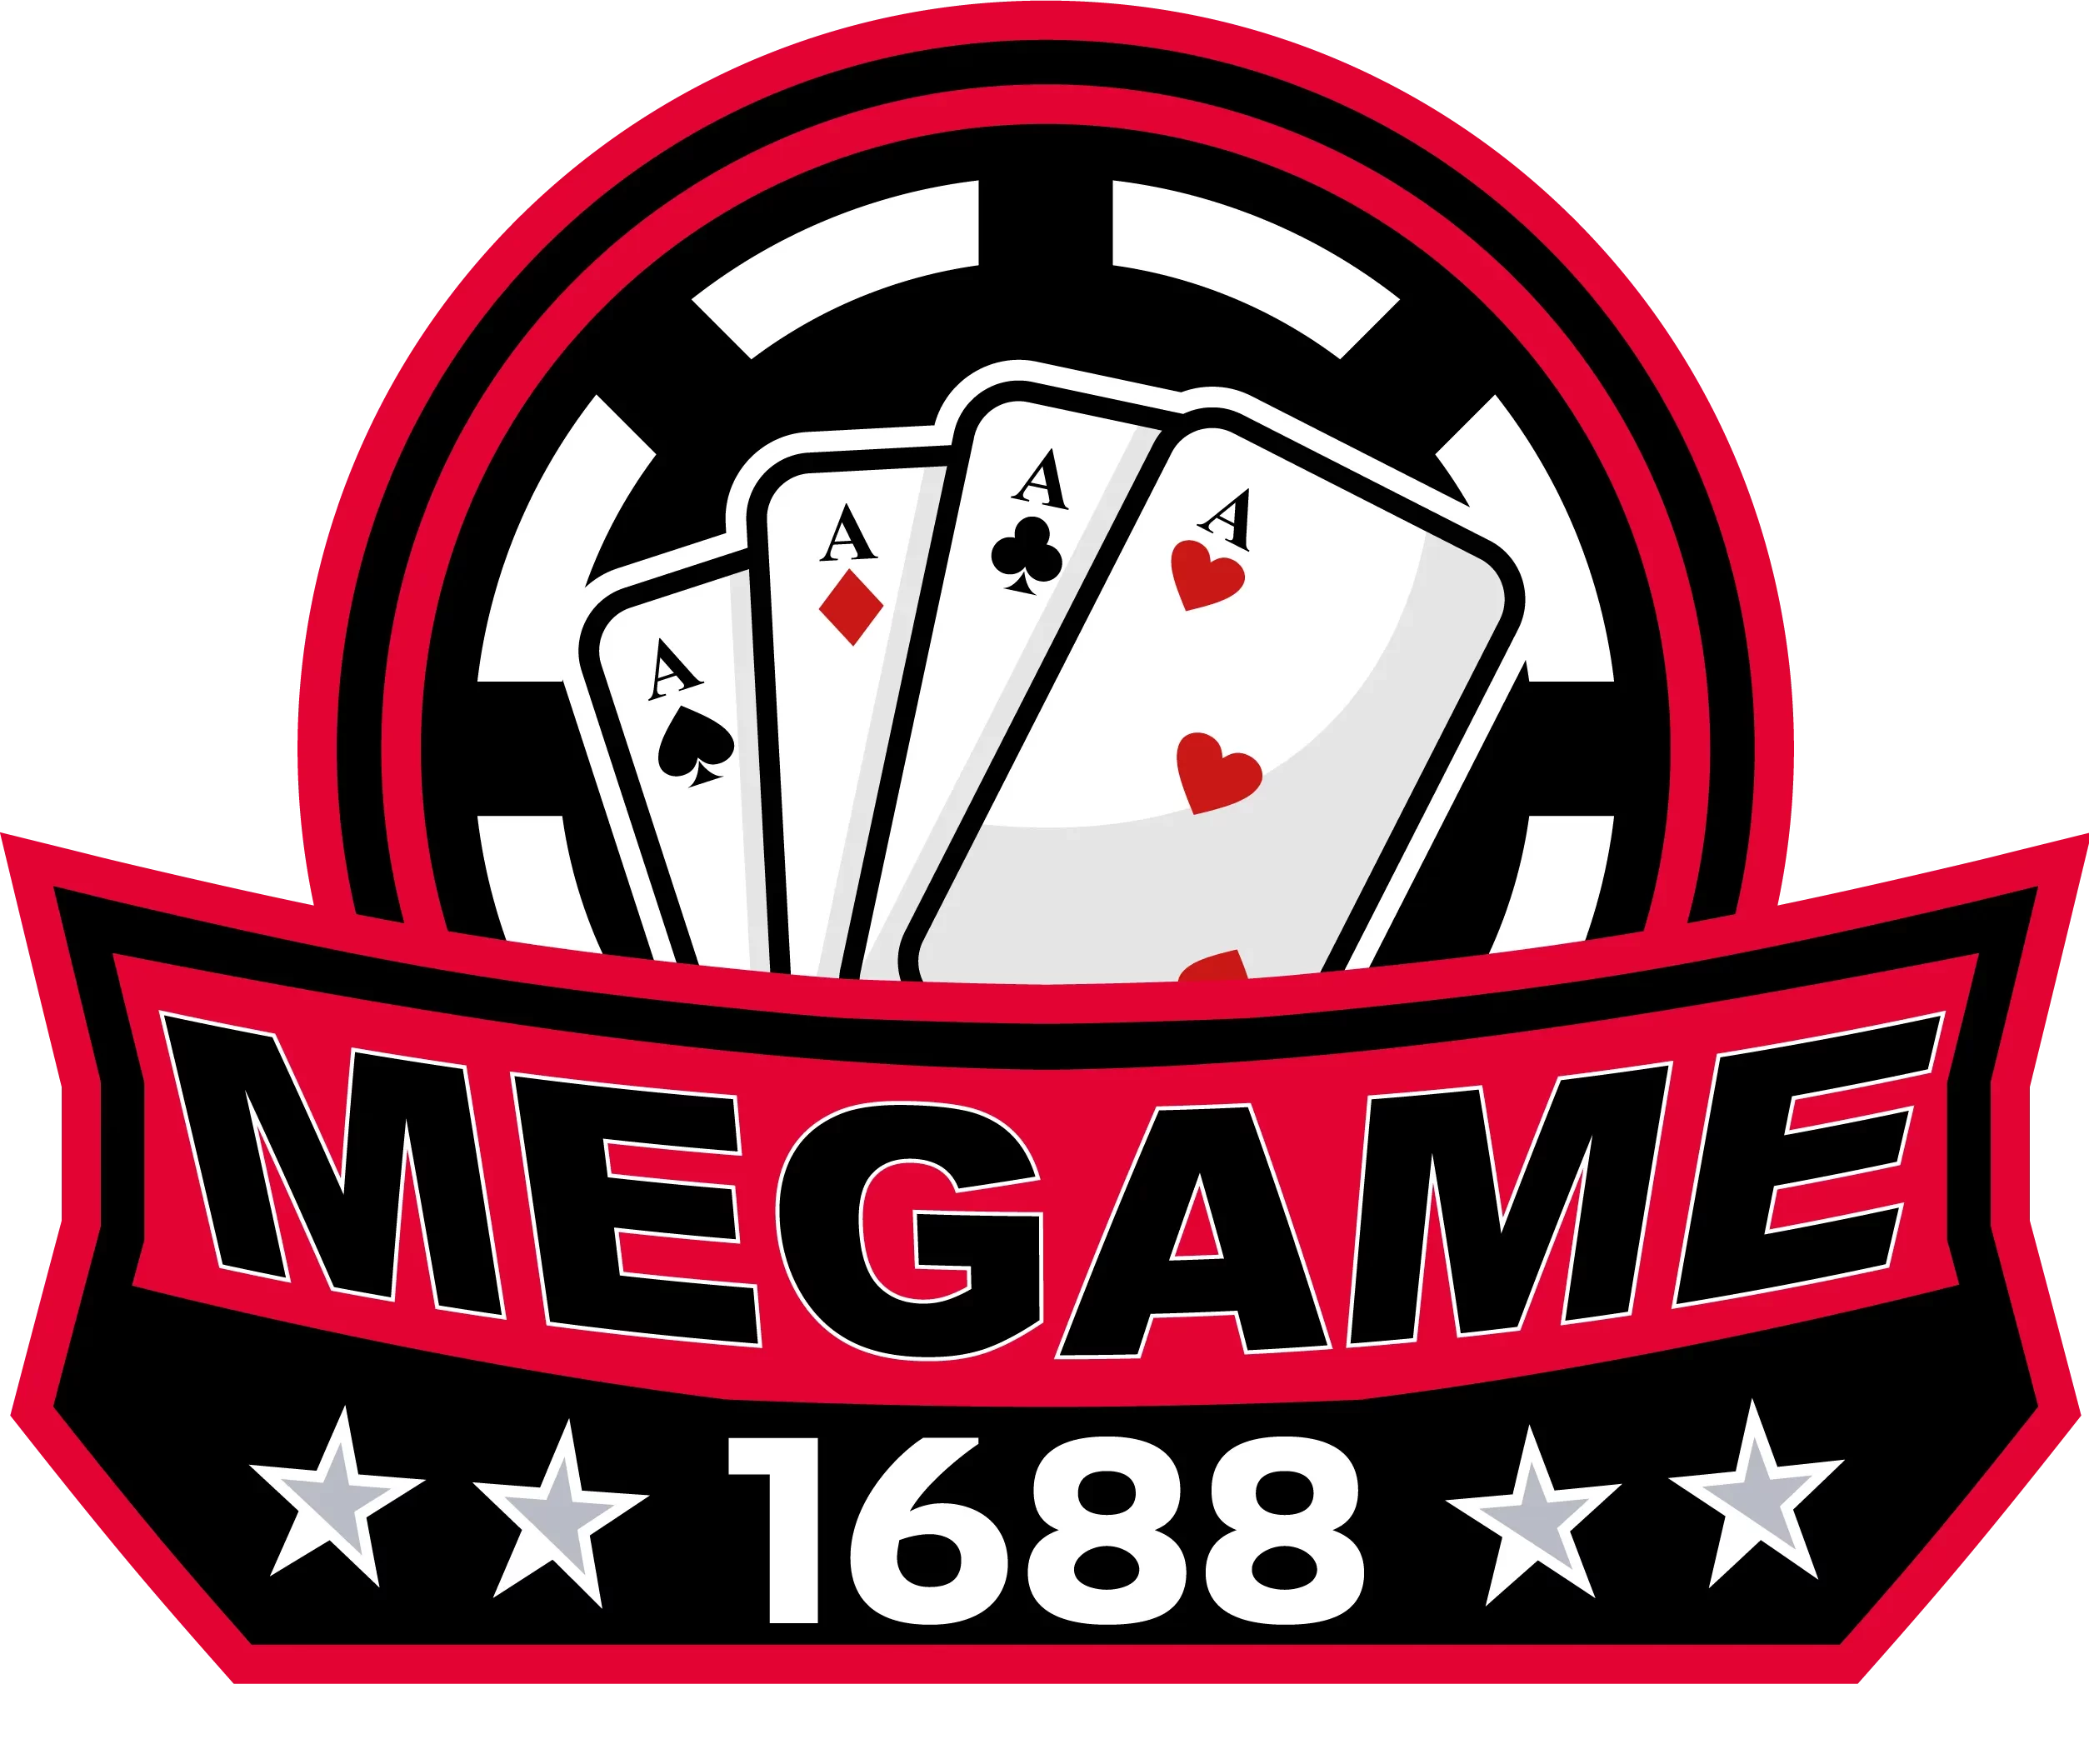 Megame888